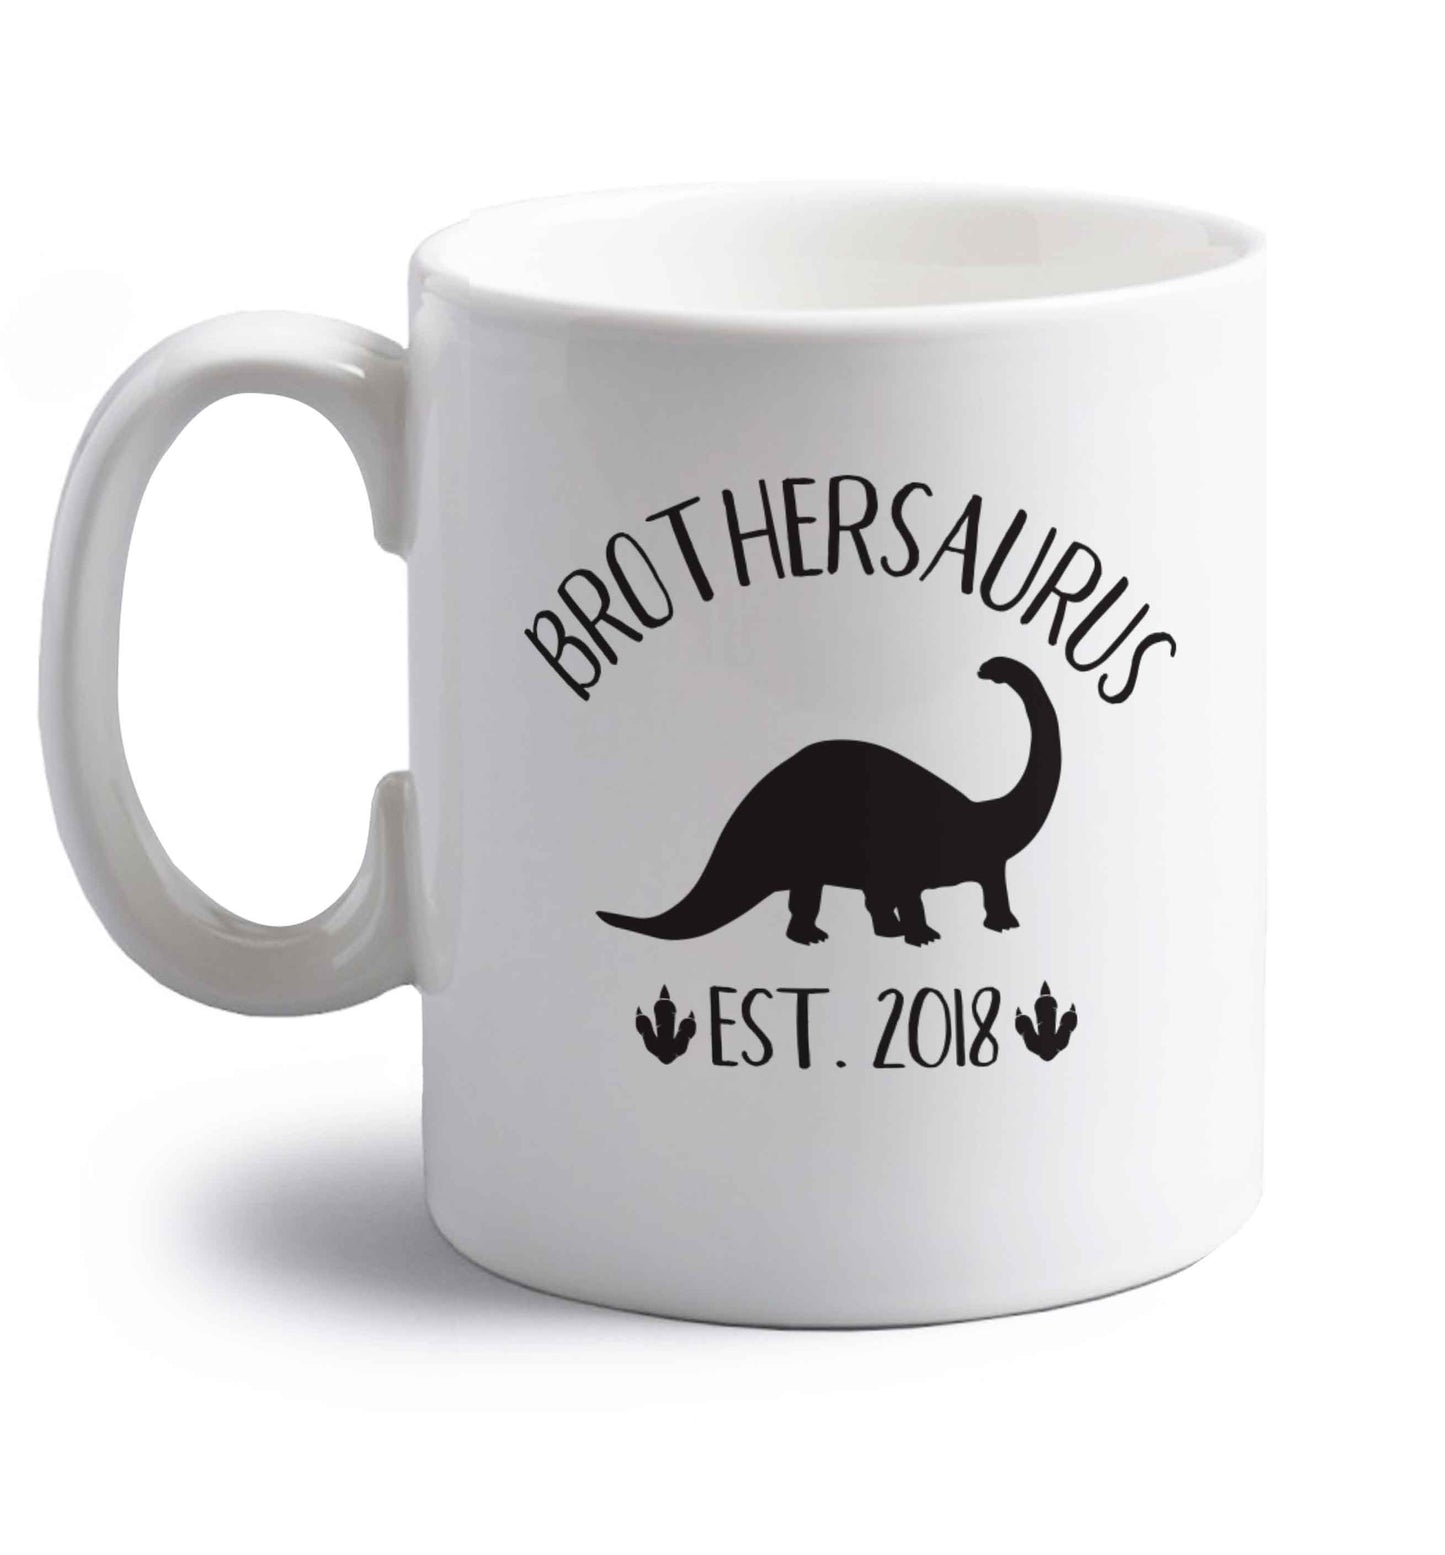 Personalised brothersaurus since (custom date) right handed white ceramic mug 